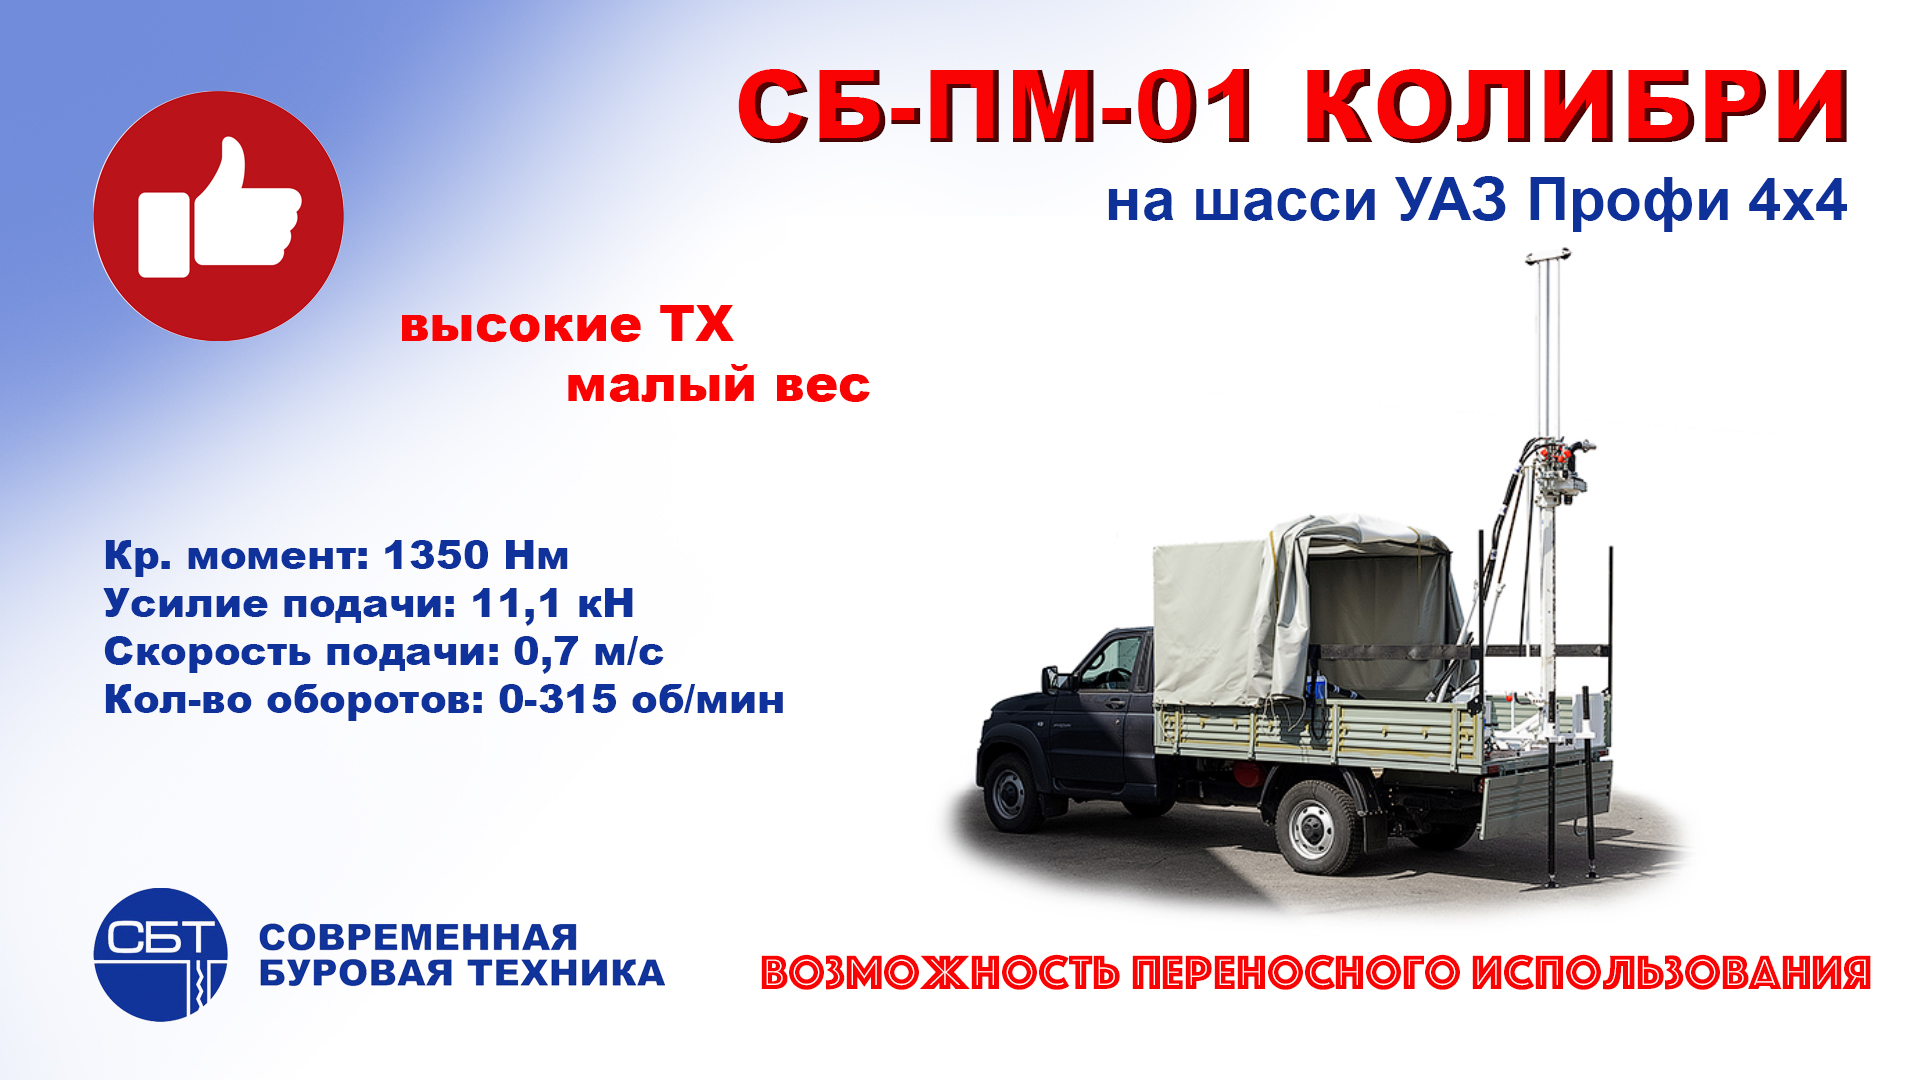 Буровой станок СБ-ПМ-01 Колибри на шасси УАЗ Профи